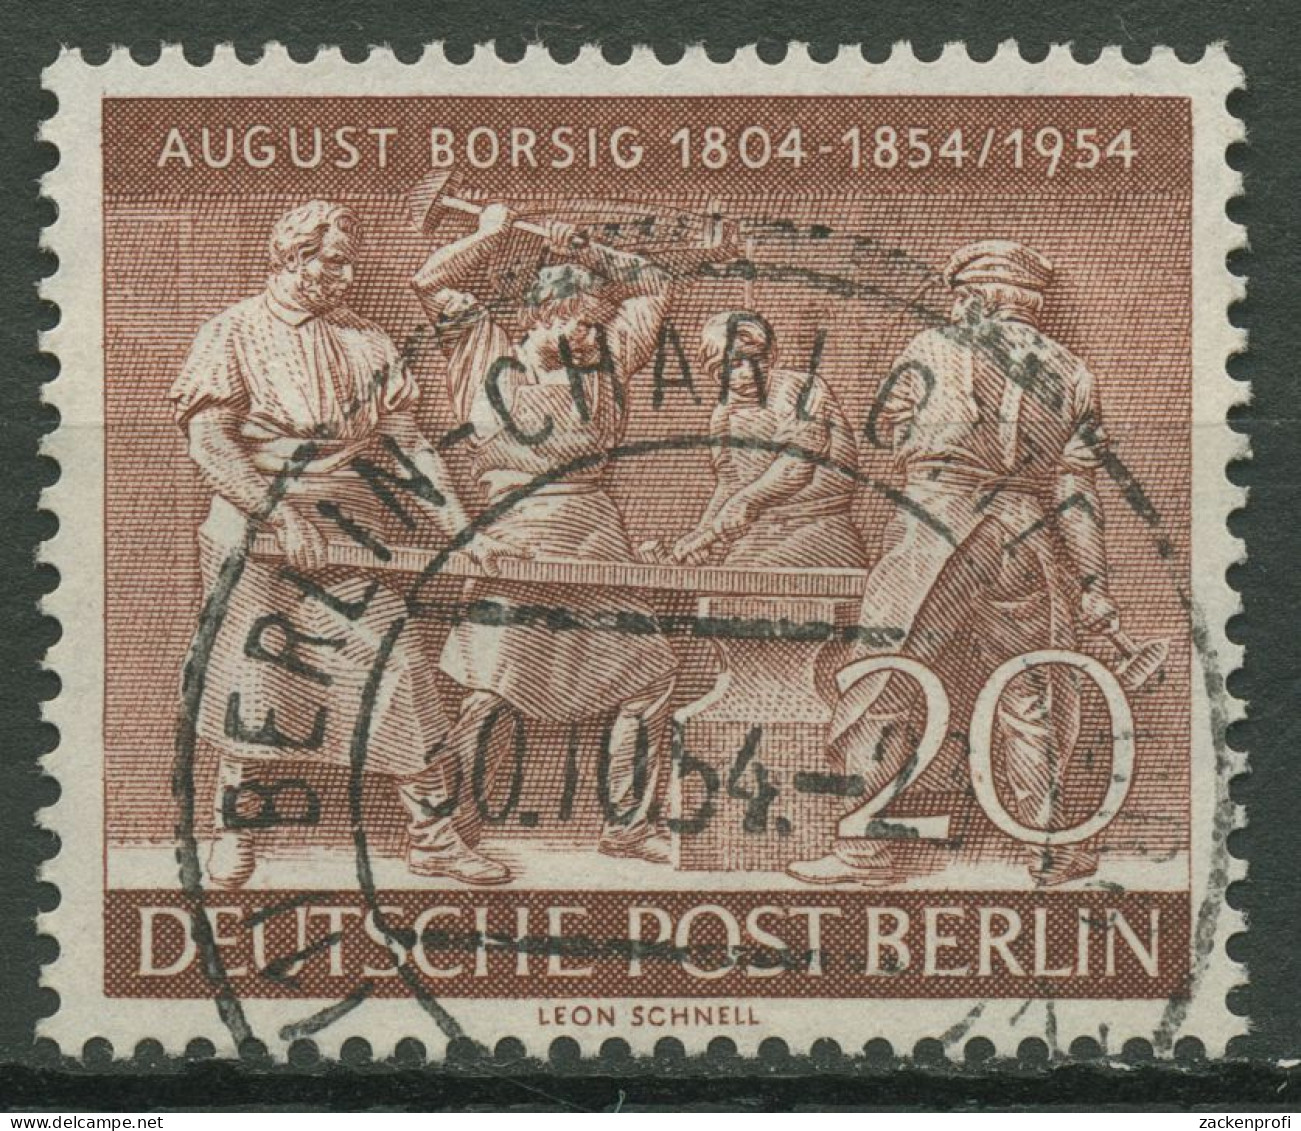 Berlin 1954 100. Todestag Von August Borsig 125 Mit BERLIN-TOP-Stempel - Used Stamps